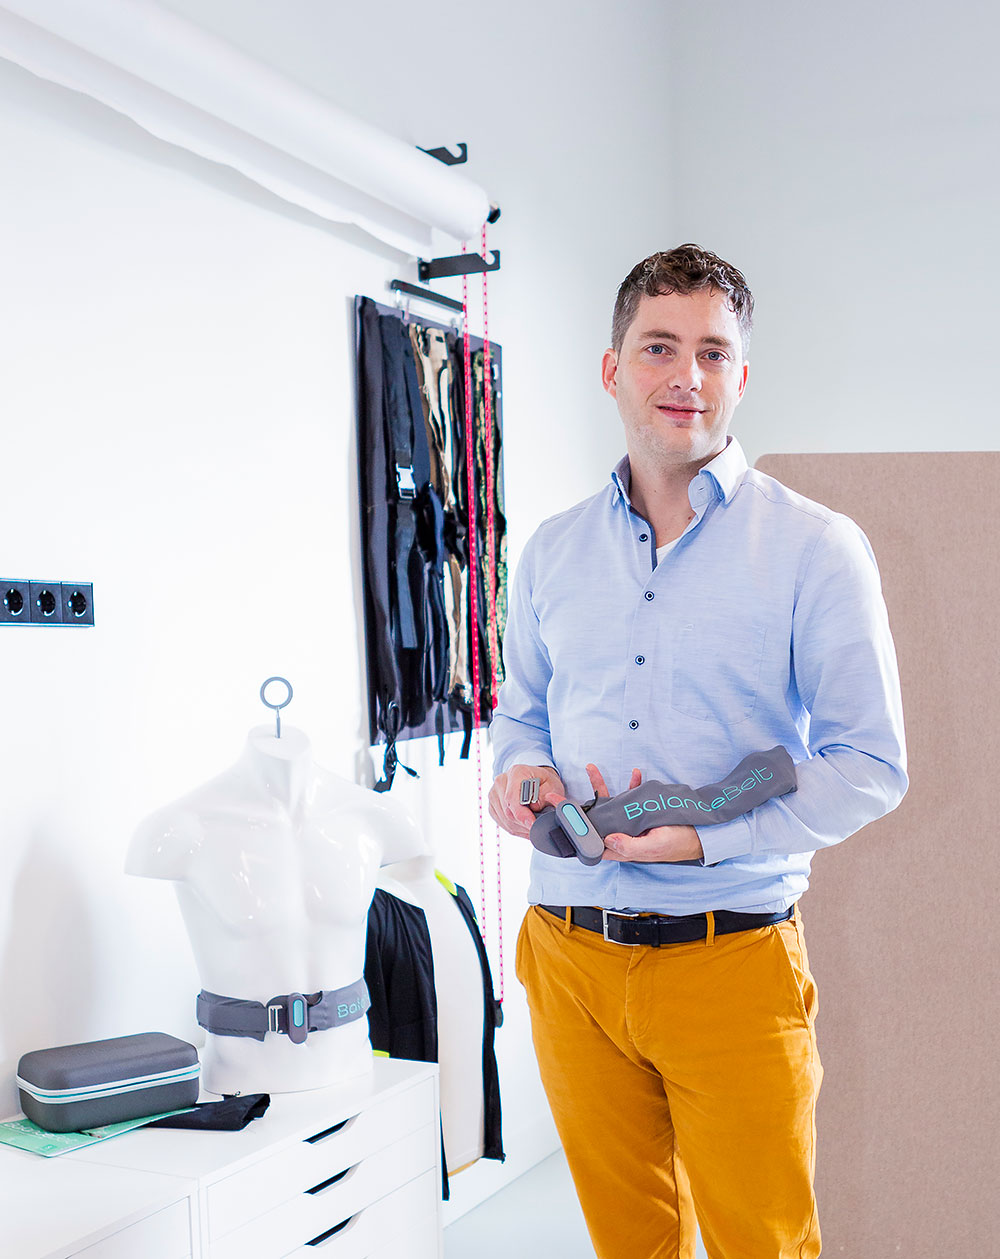 Merijn Klarenbeek, CEO of Elitac Wearables, holding the BalanceBelt. This is a haptic feedback belt for people with balance disorders.